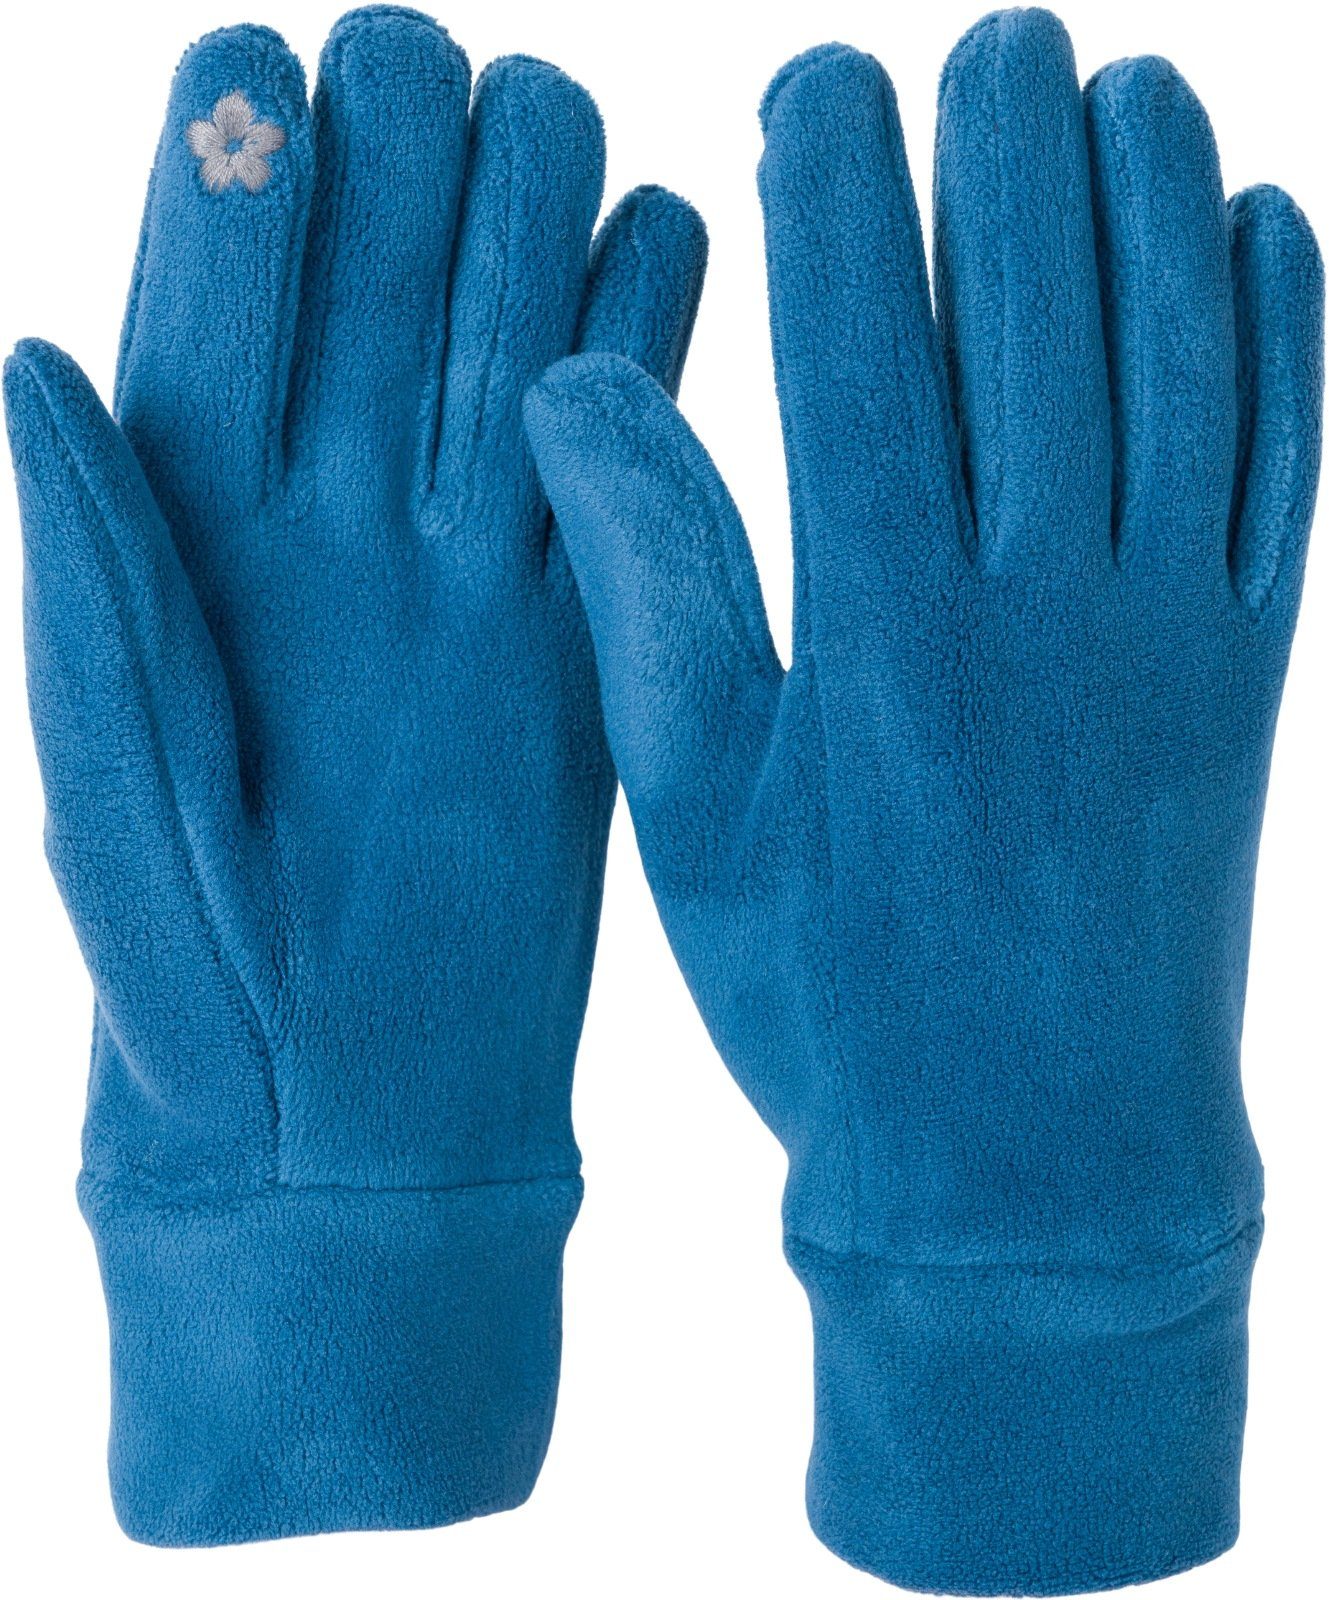 Handschuhe Touchscreen Fleecehandschuhe Fleece styleBREAKER Einfarbige